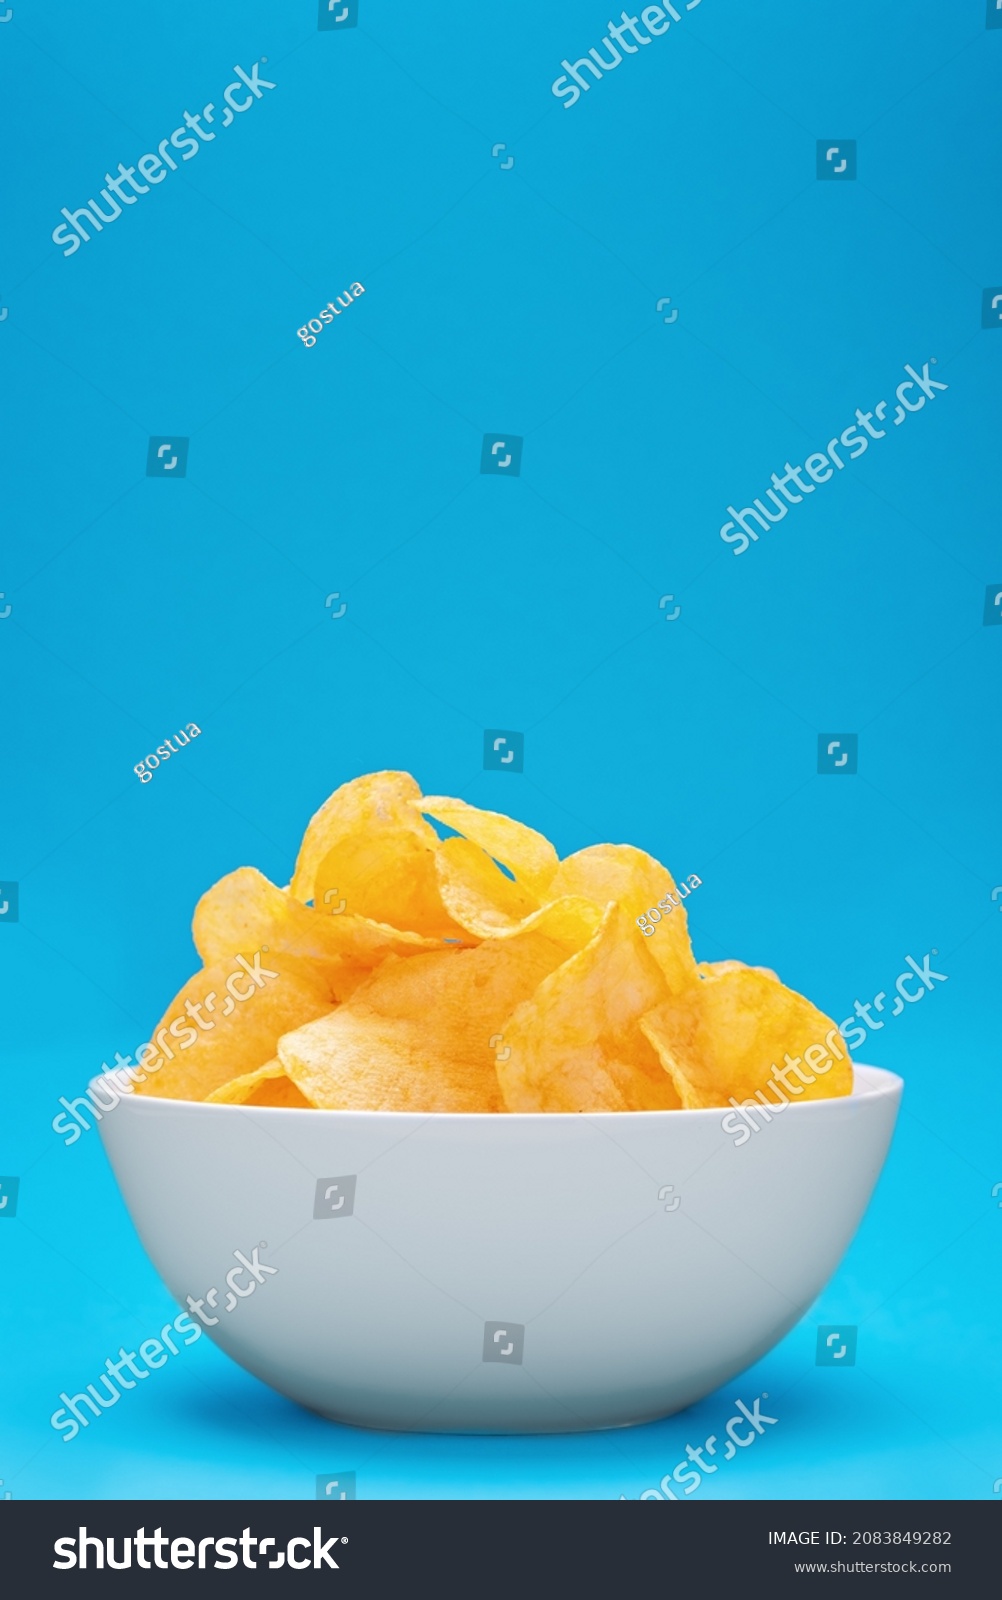 Potato chips or crisps in white bowl on blue background #2083849282